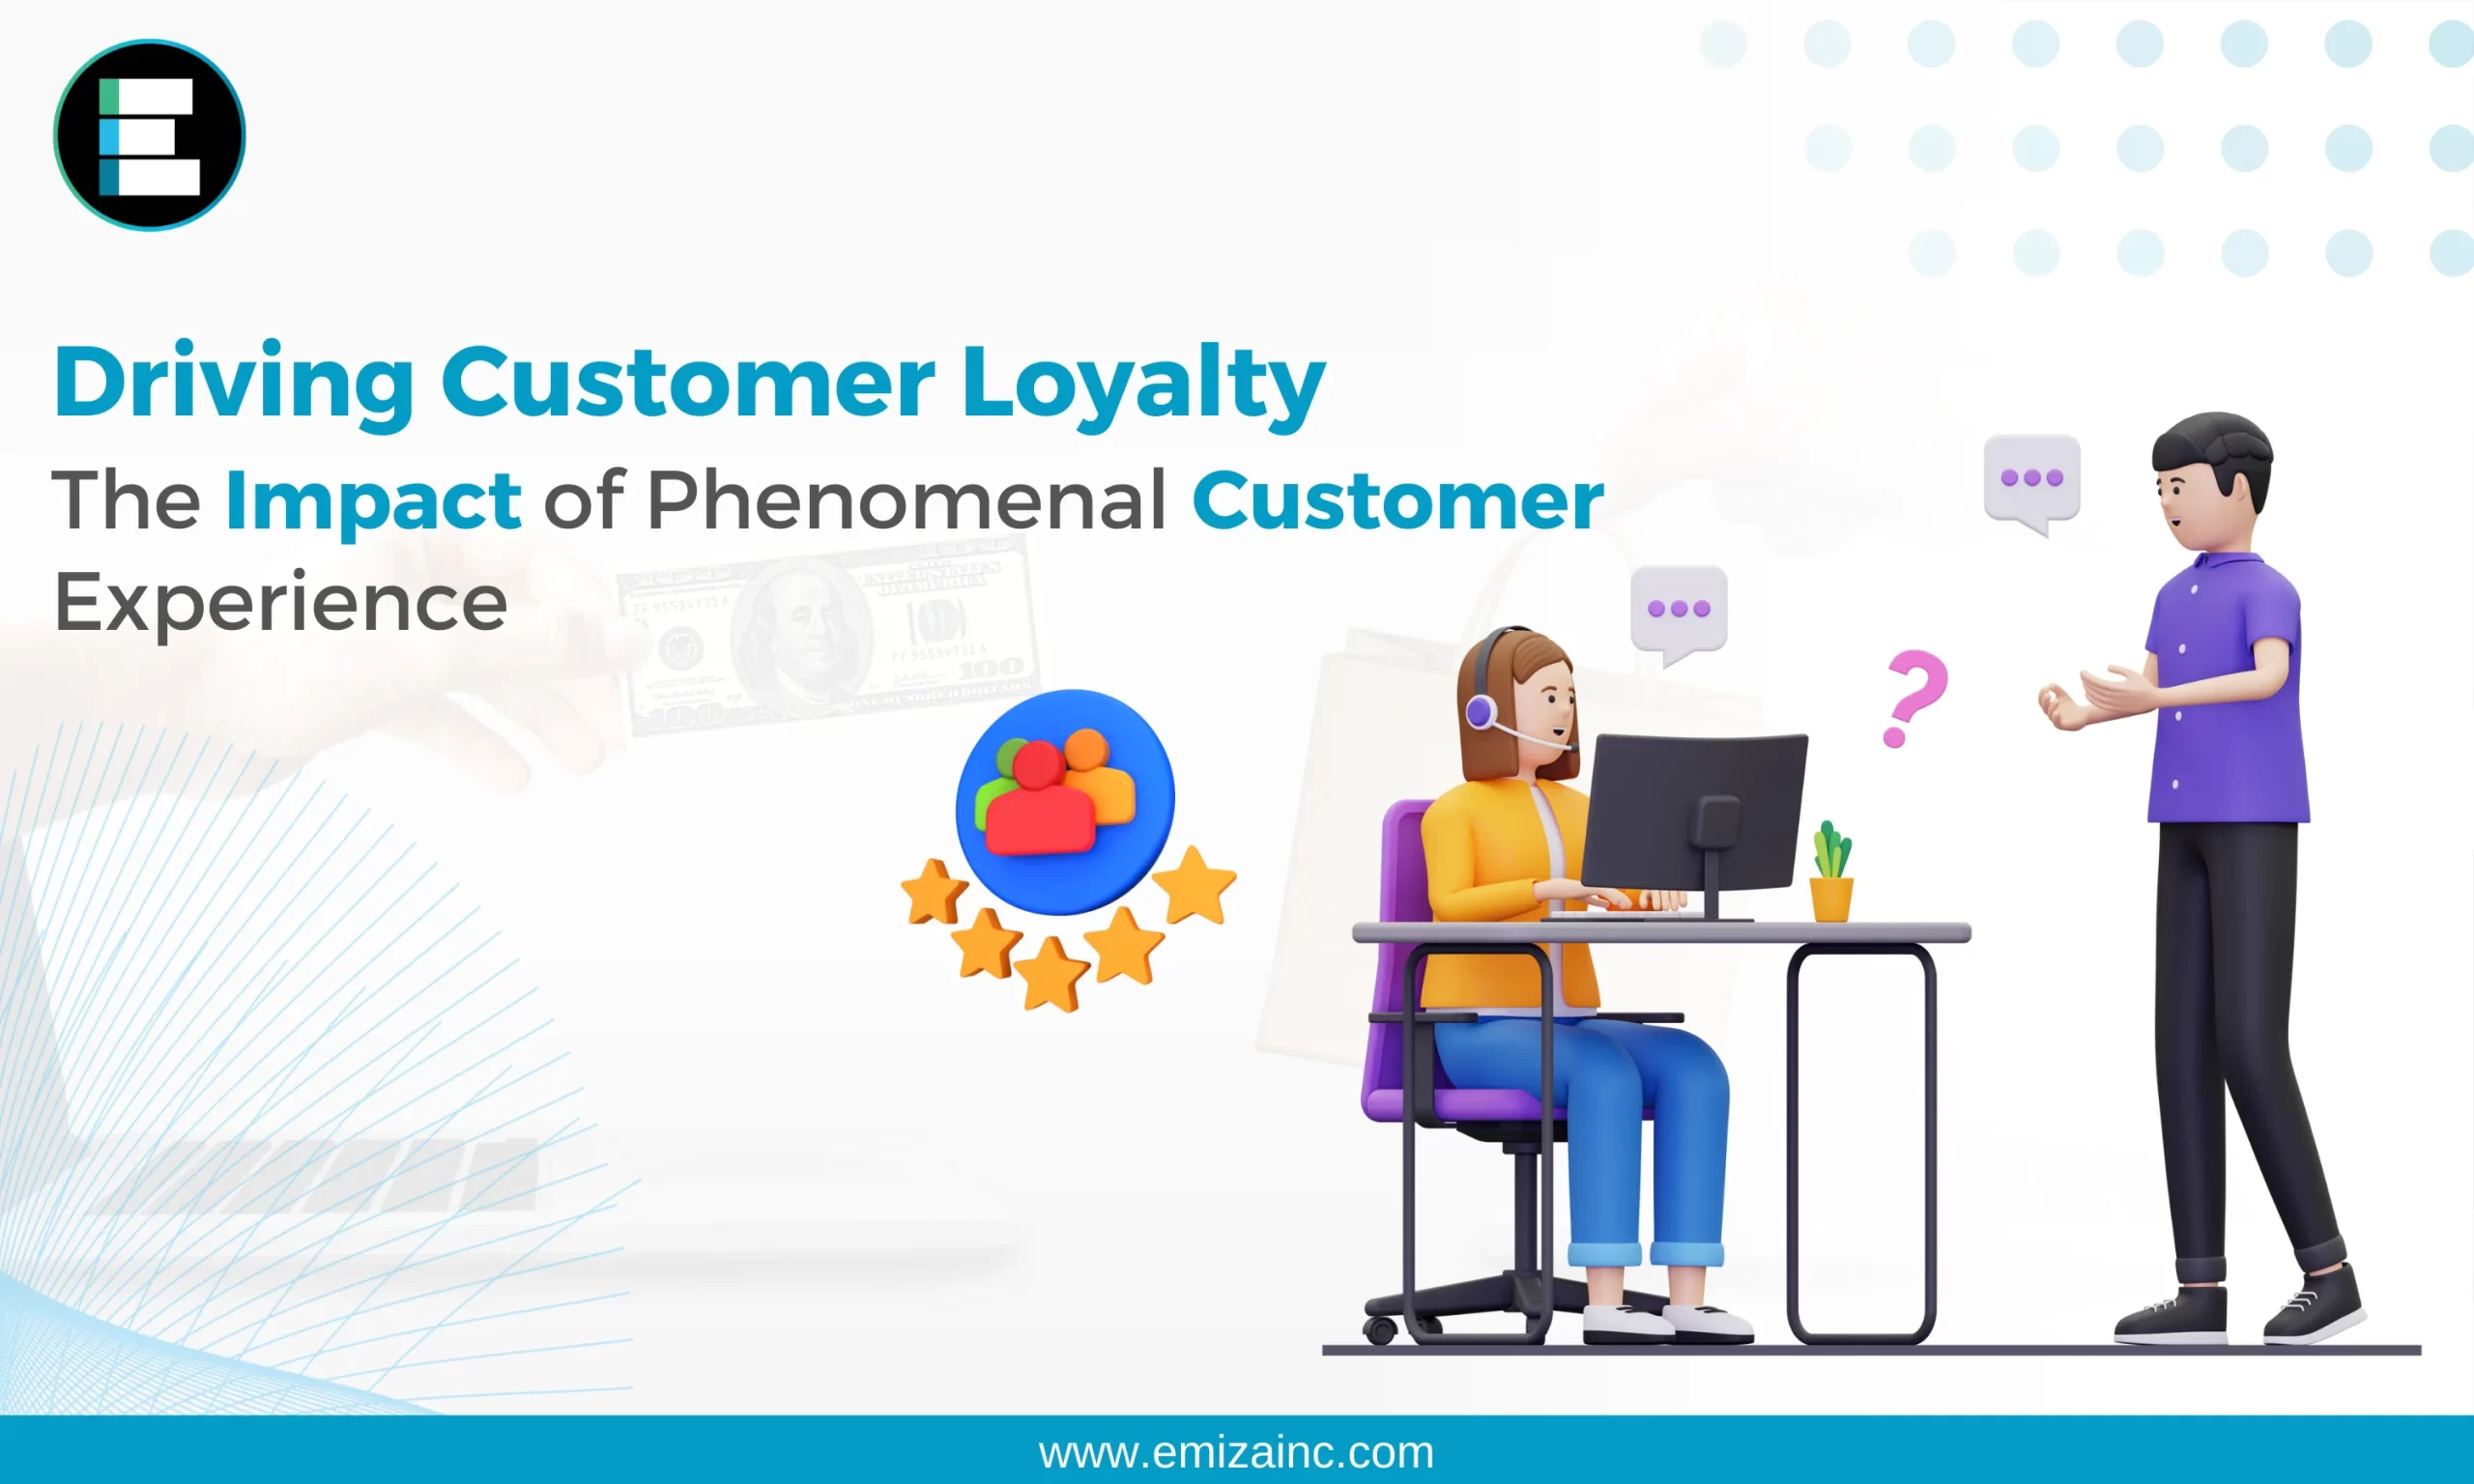 Driving Customer Loyalty: The Impact of Phenomenal Customer Experience